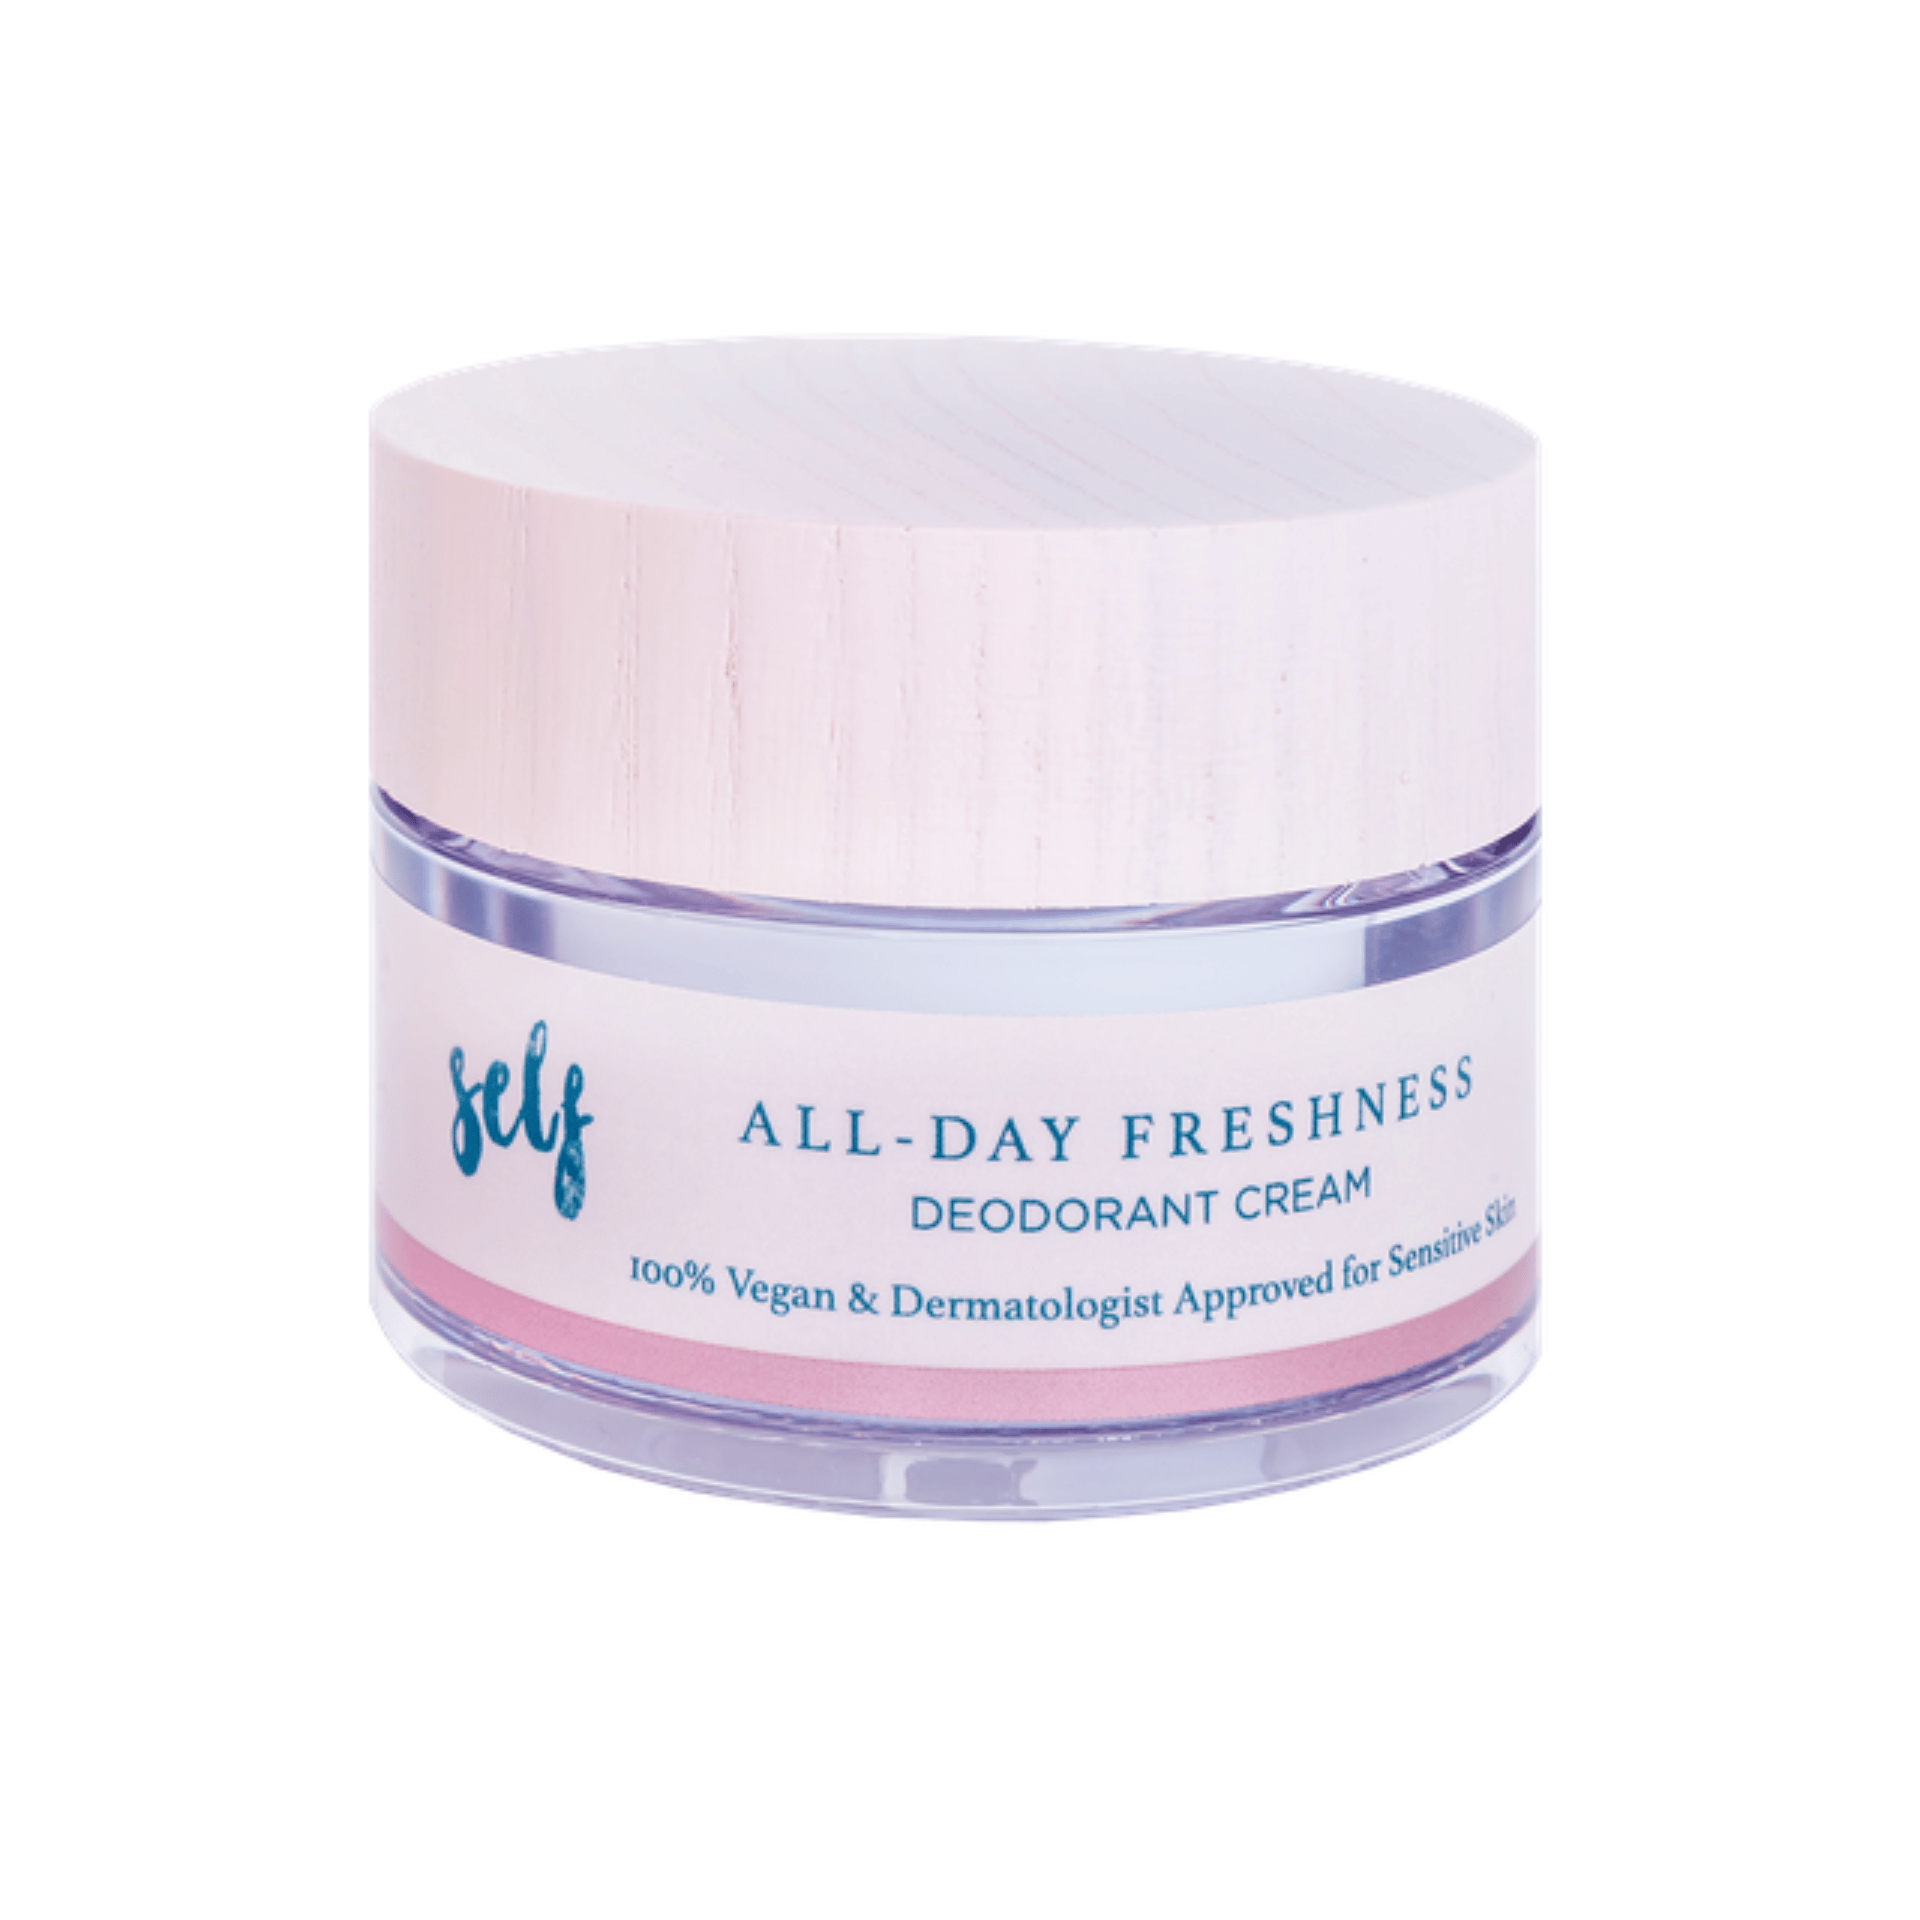 Self All-Day Freshness Deodorant Cream